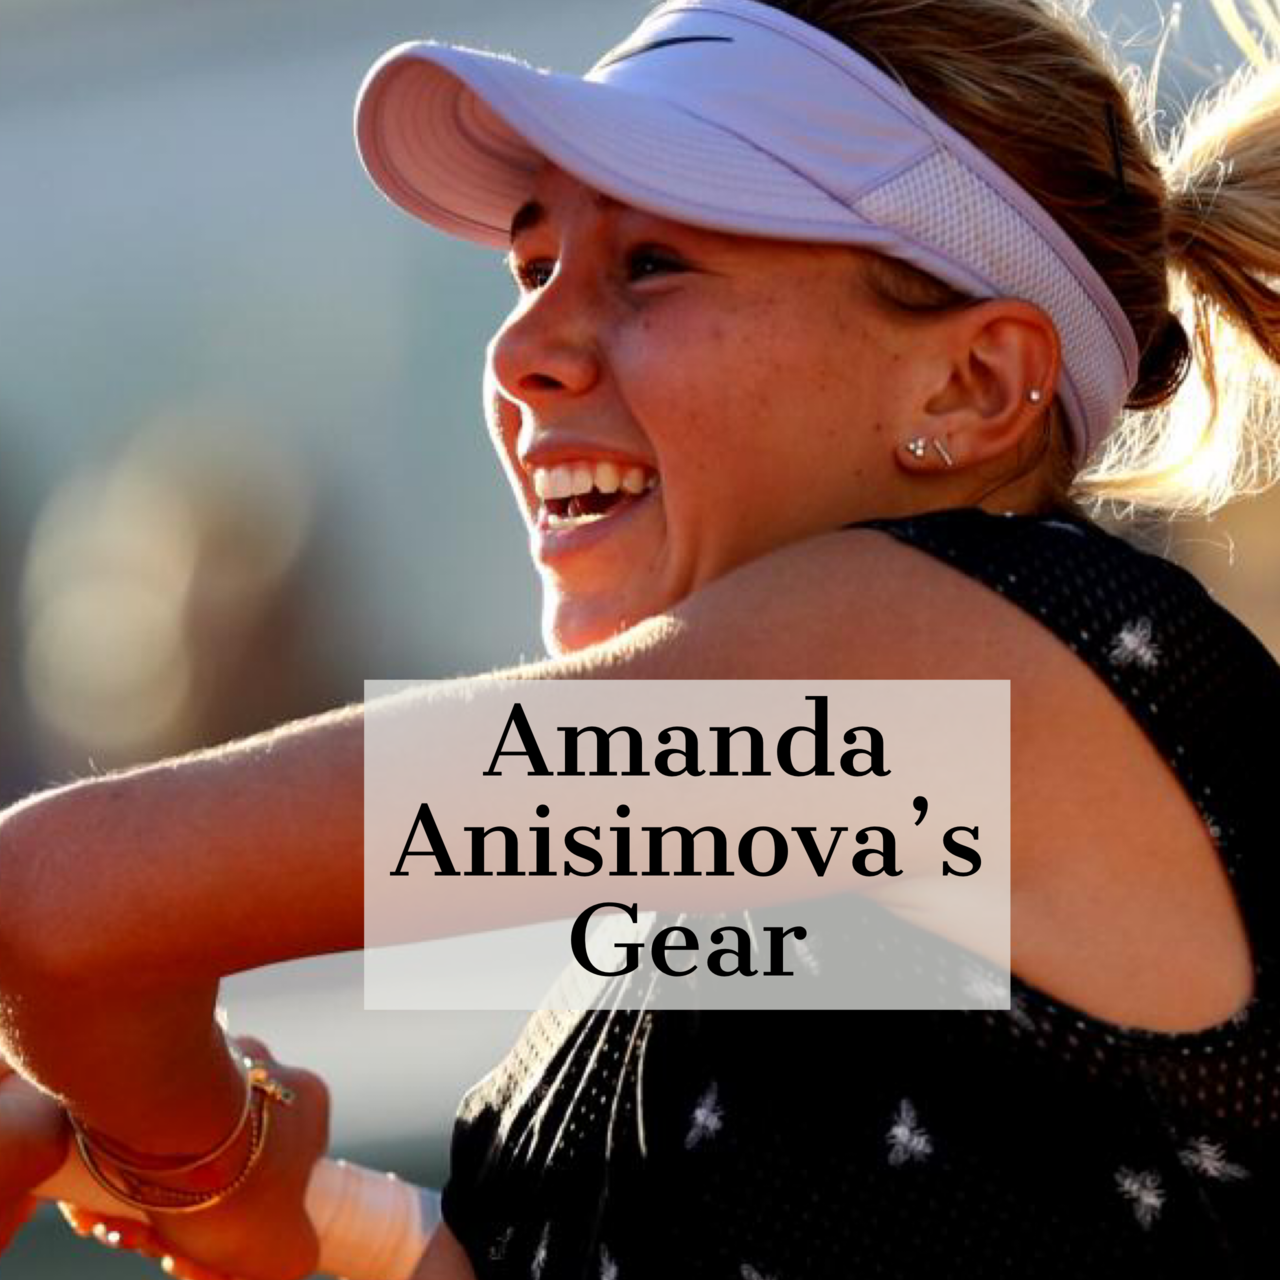 Who Is Amanda Anisimova?